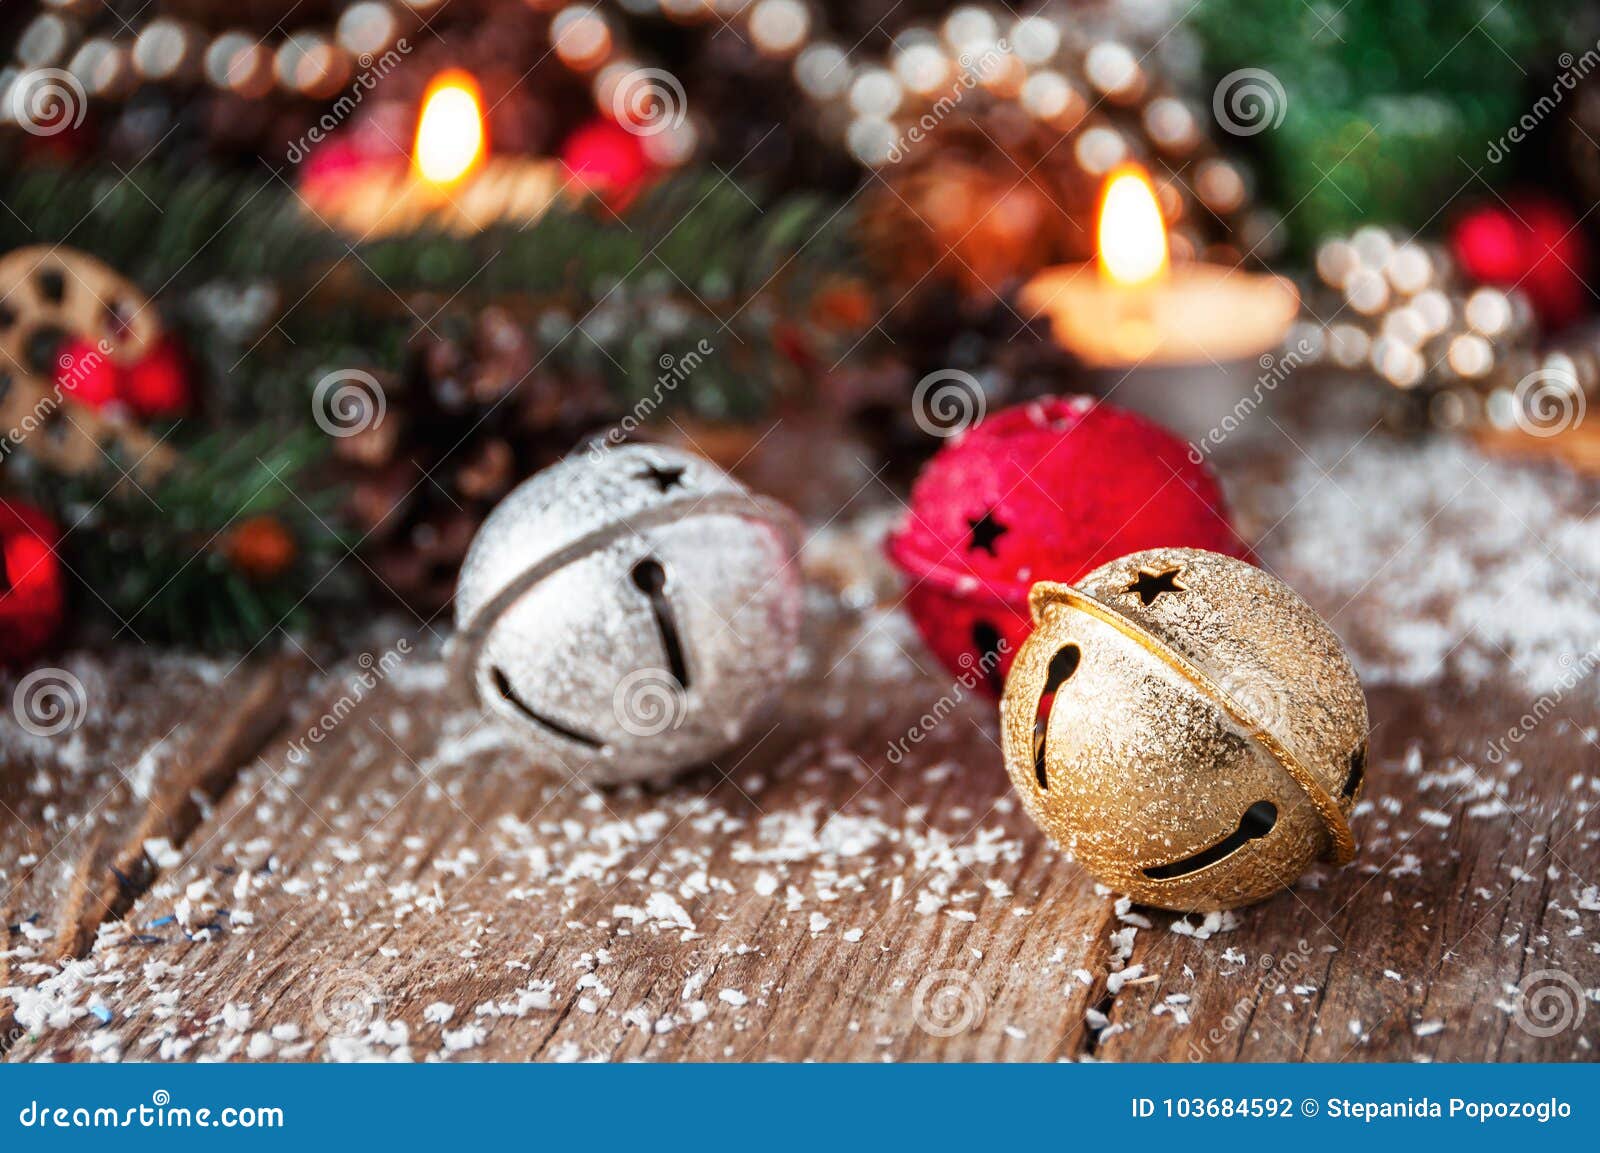 jingle bells close-up. christmas background